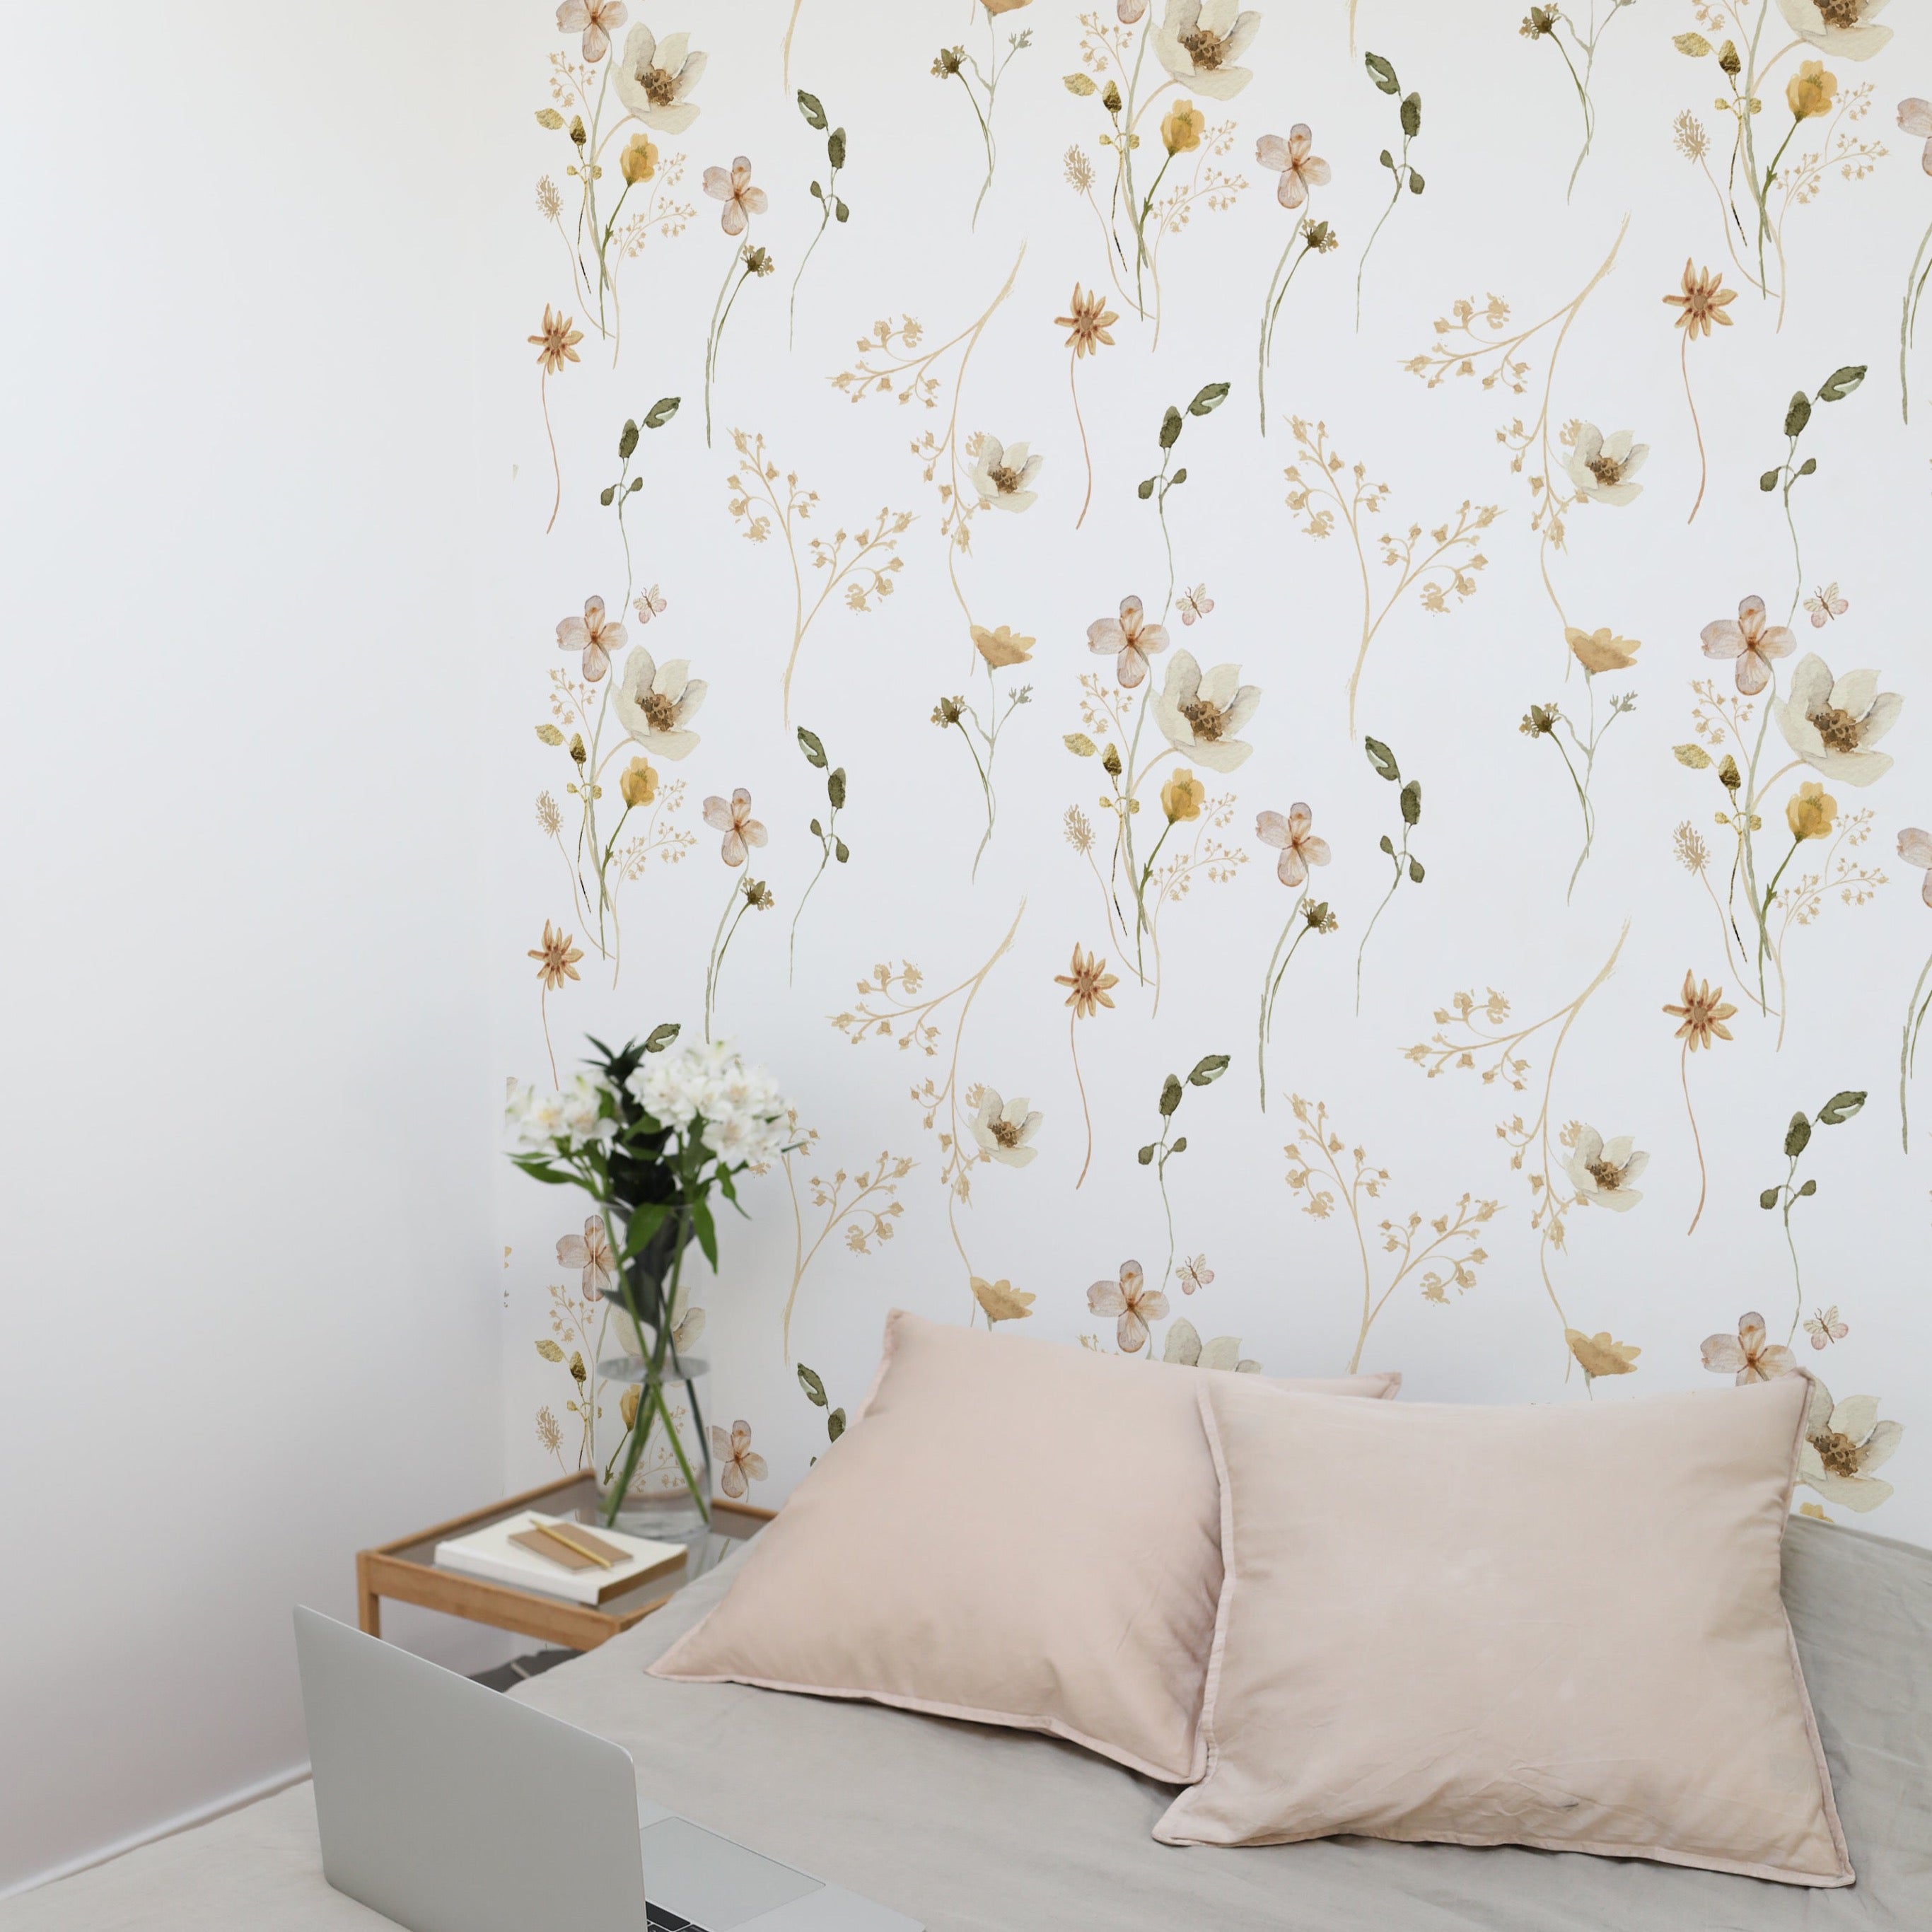 wallpaper, peel and stick wallpaper, Home decor, delicate floral wallpaper, Golden yellow wallpaper, bedroom wallpaper, Floral wallpaper,